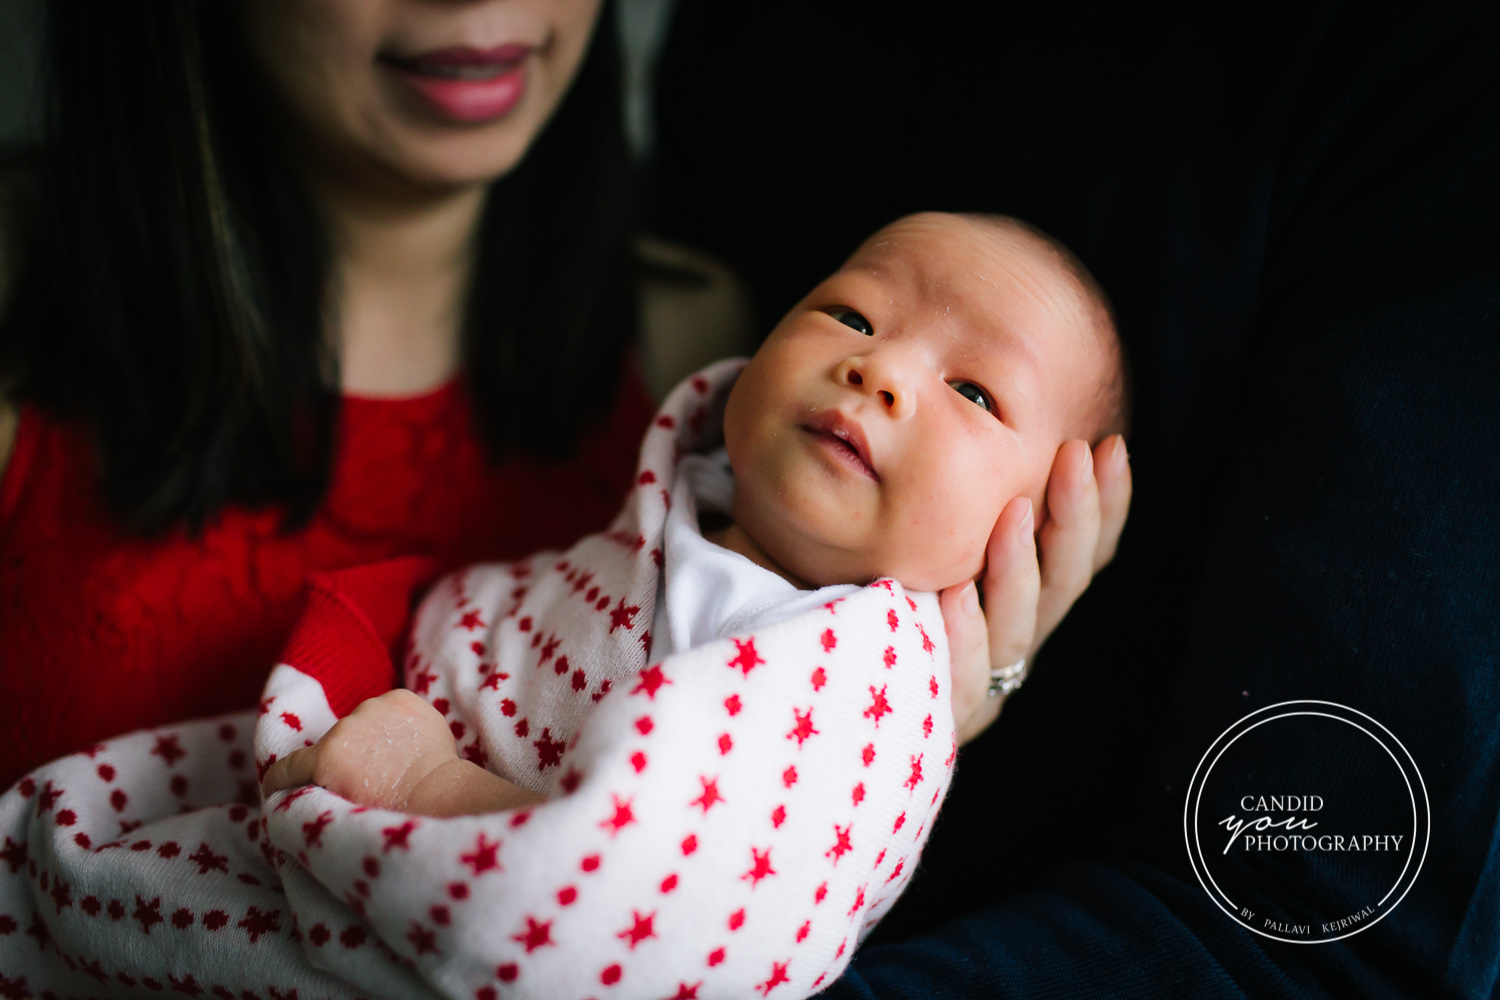 Chinese Newborn baby girl in red blanket